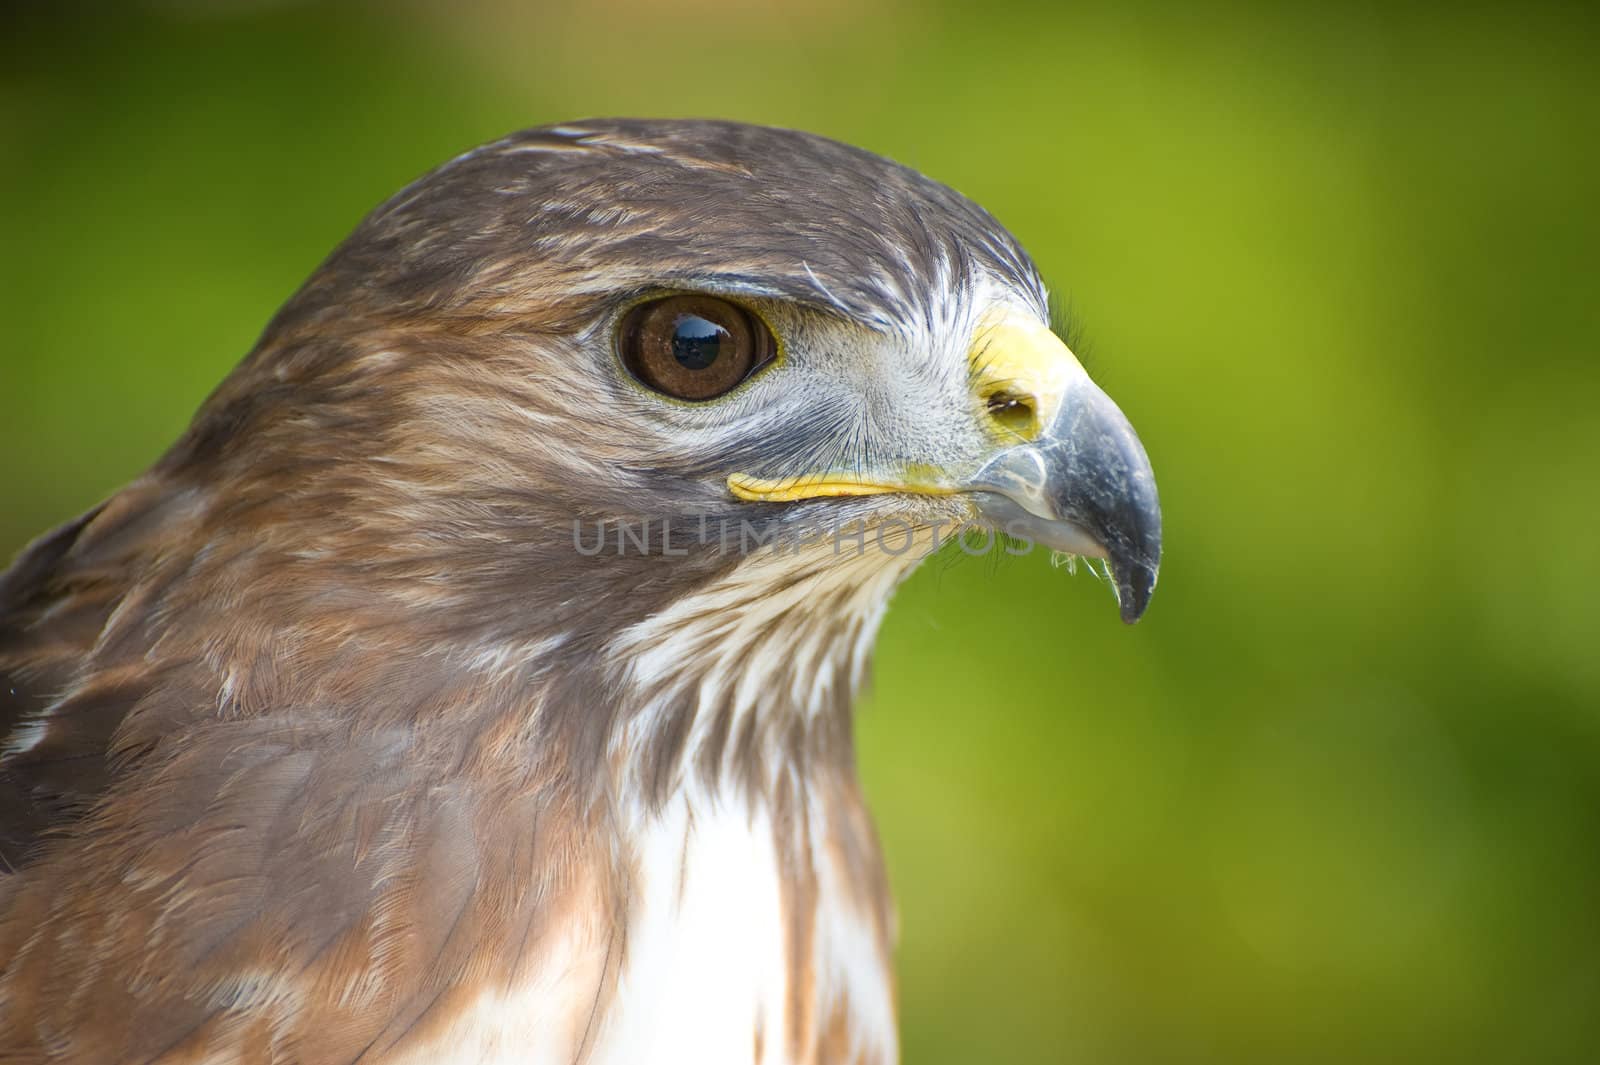 Hawks head up close